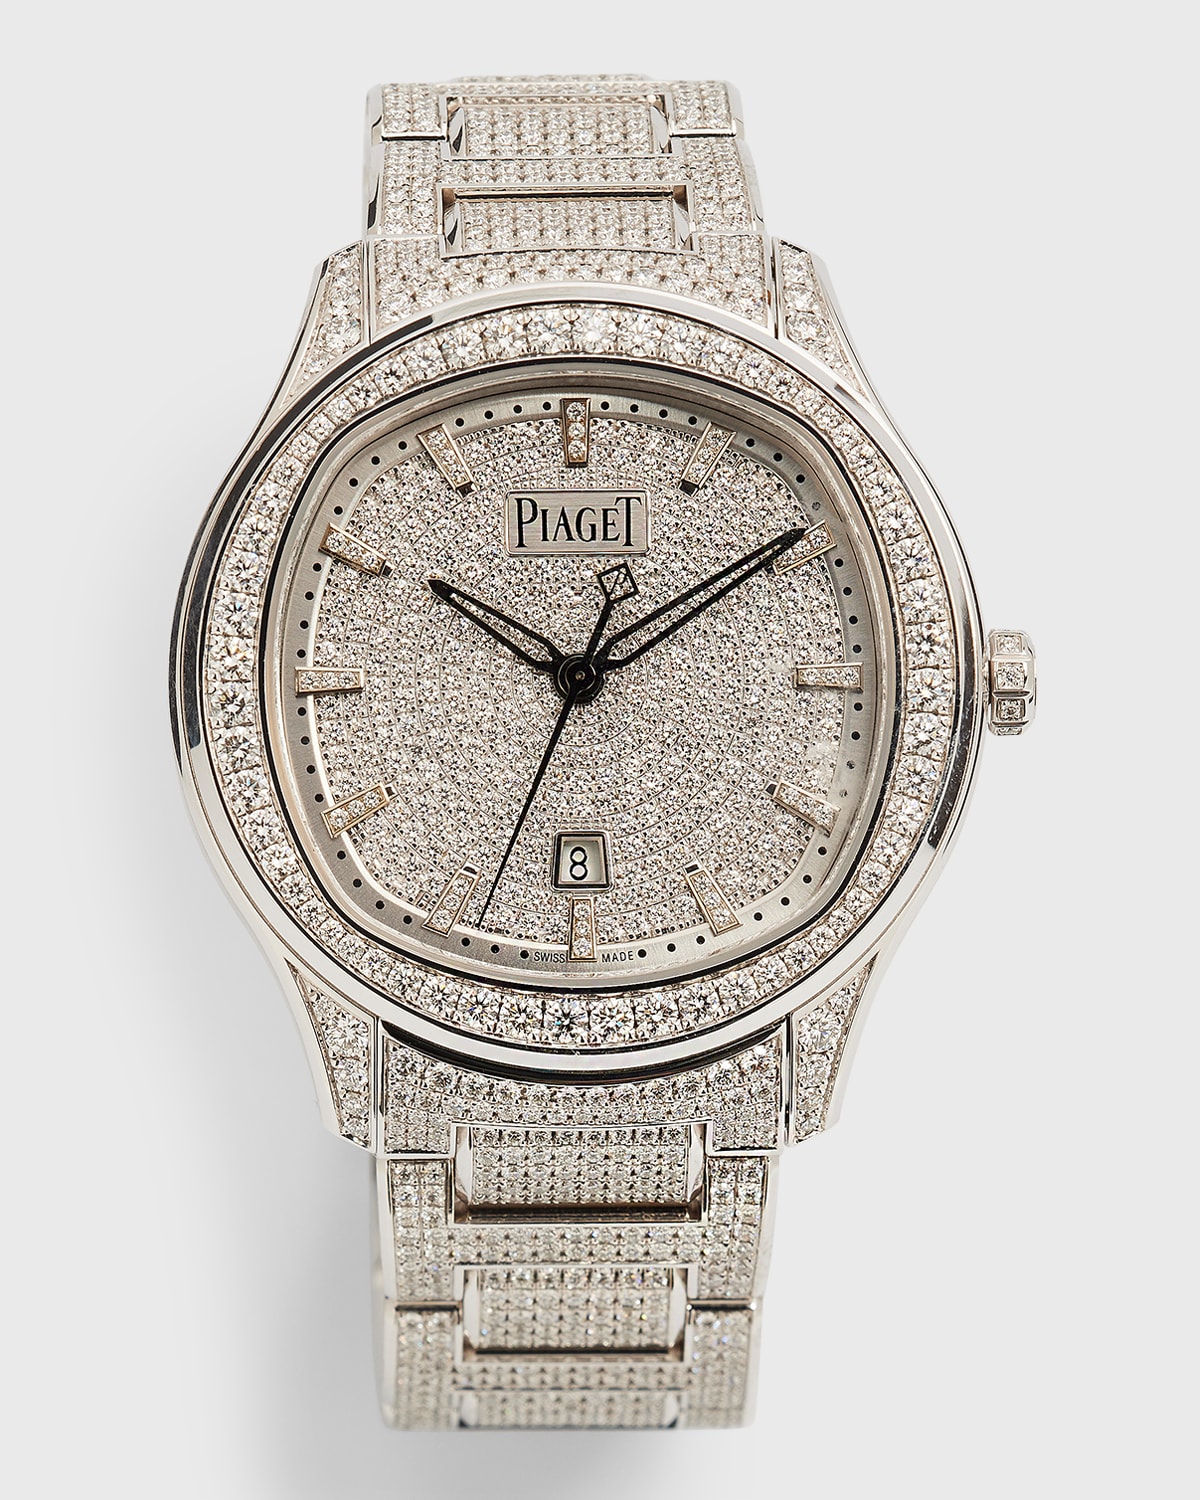 Piaget Polo Date 36mm 18k White Gold Diamond Watch